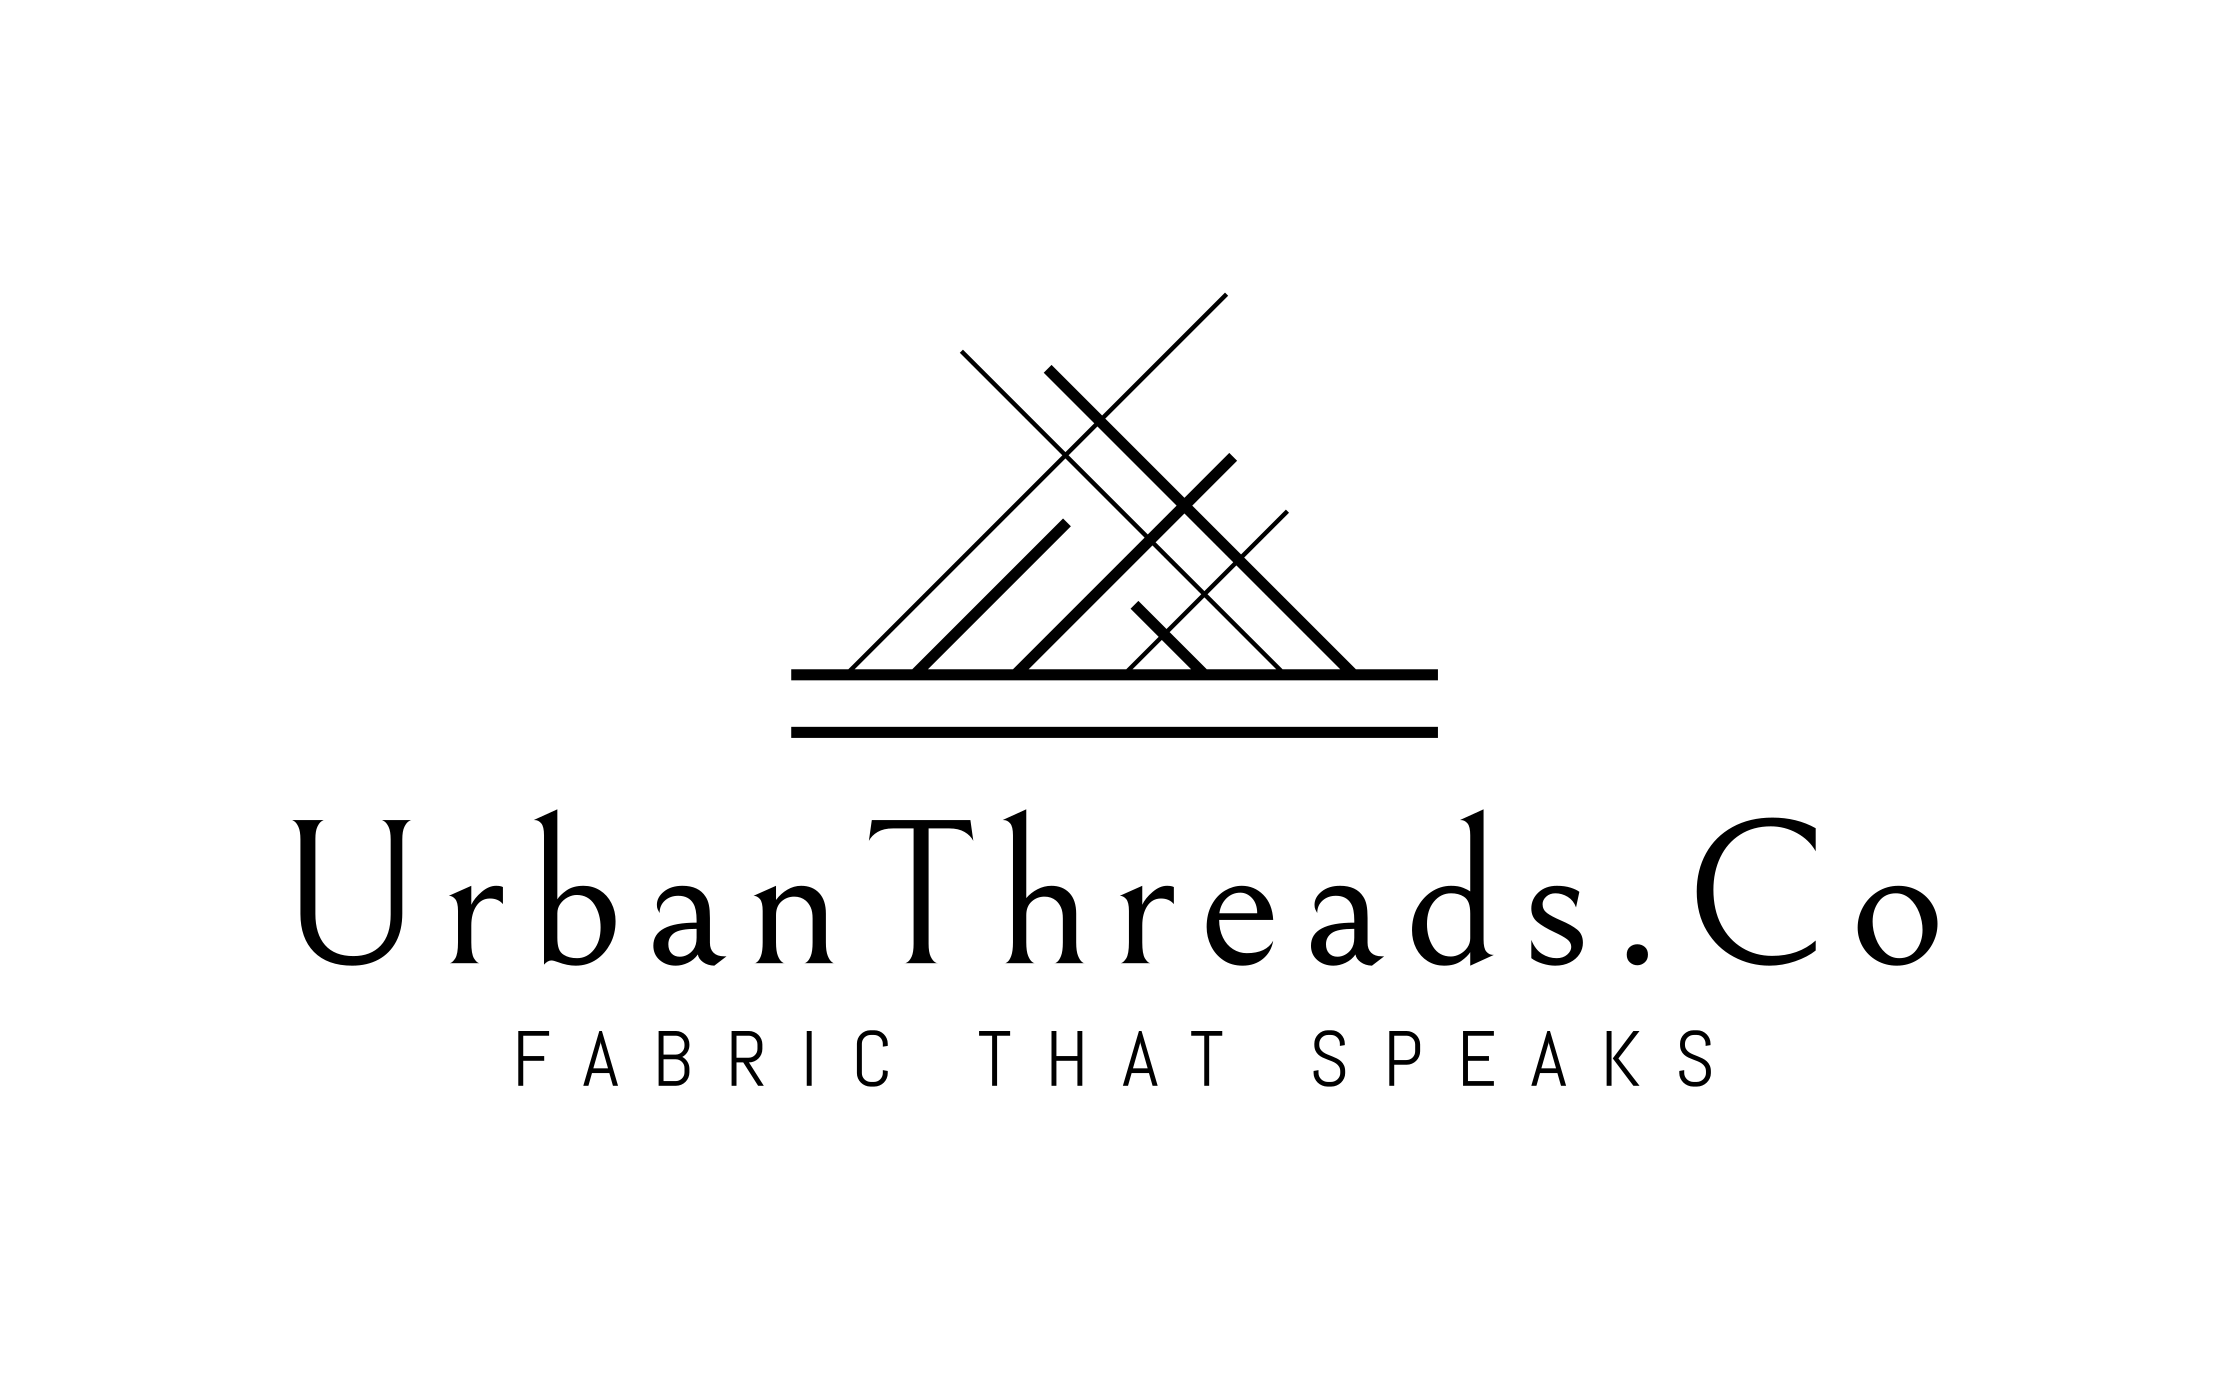 Urbanthreads.co